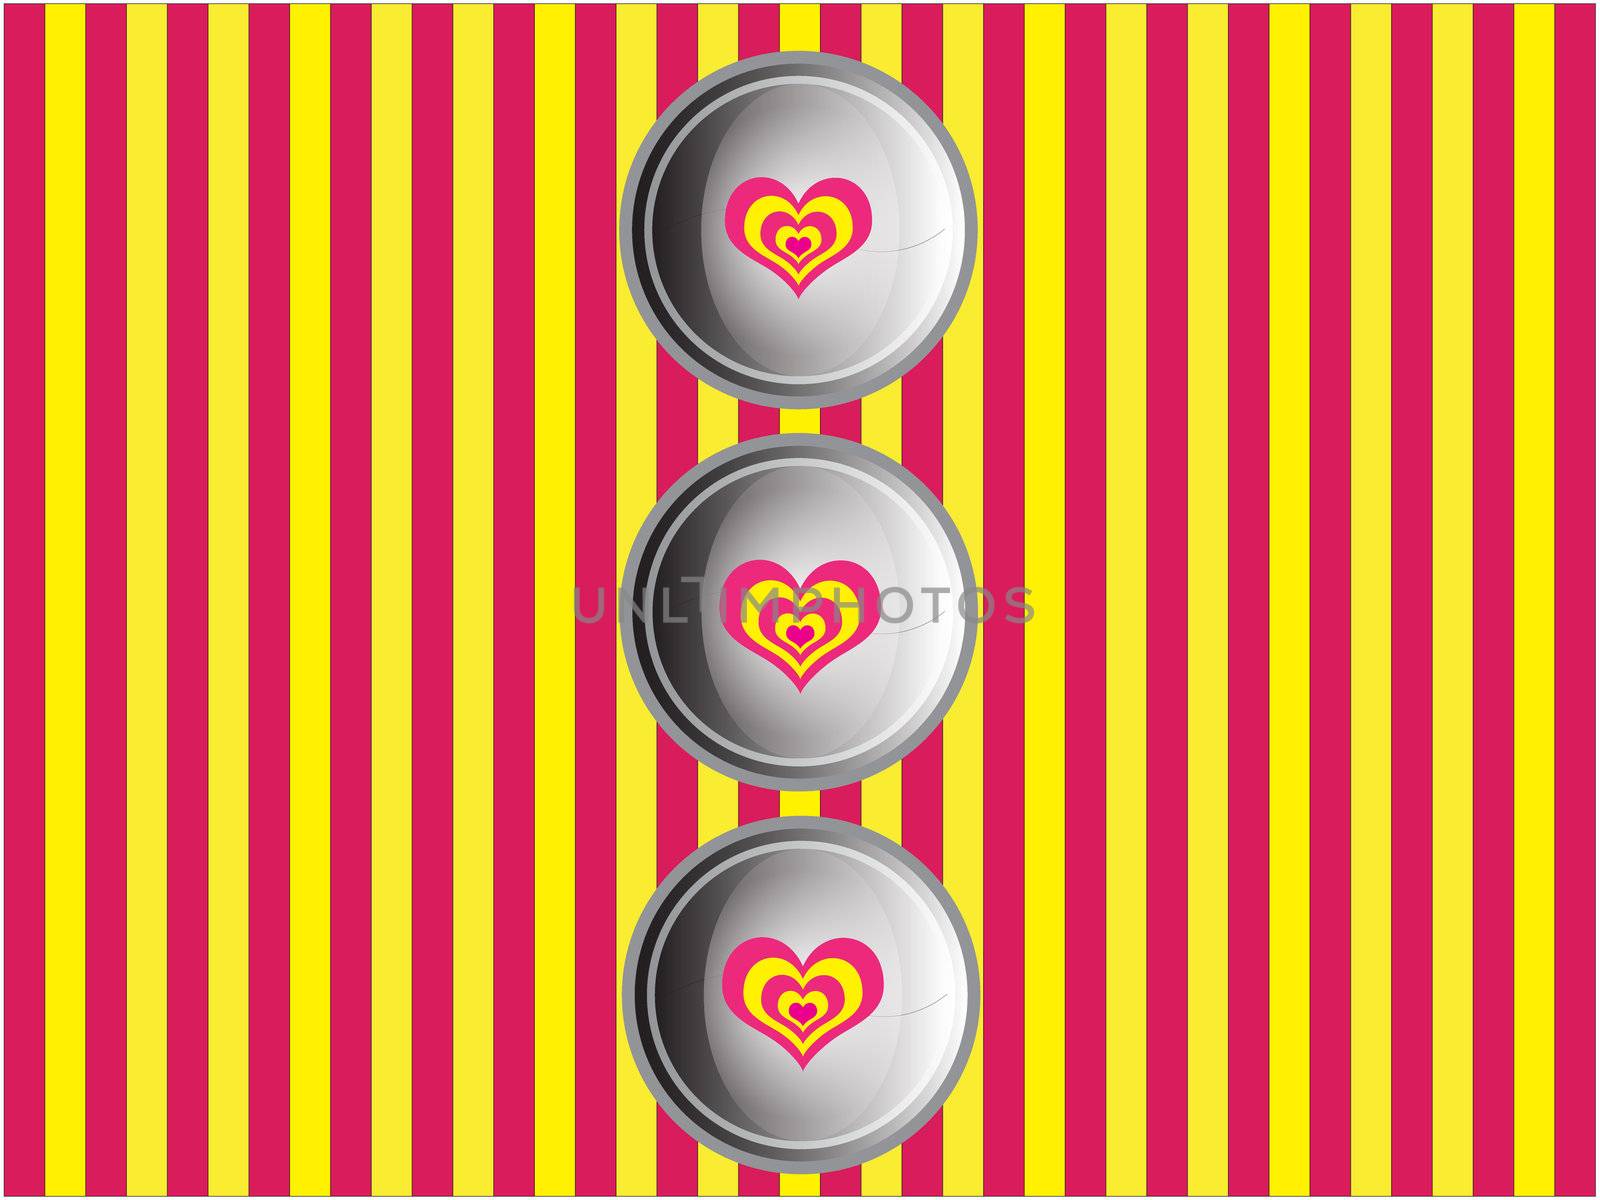 Love buttons by CaptureLight